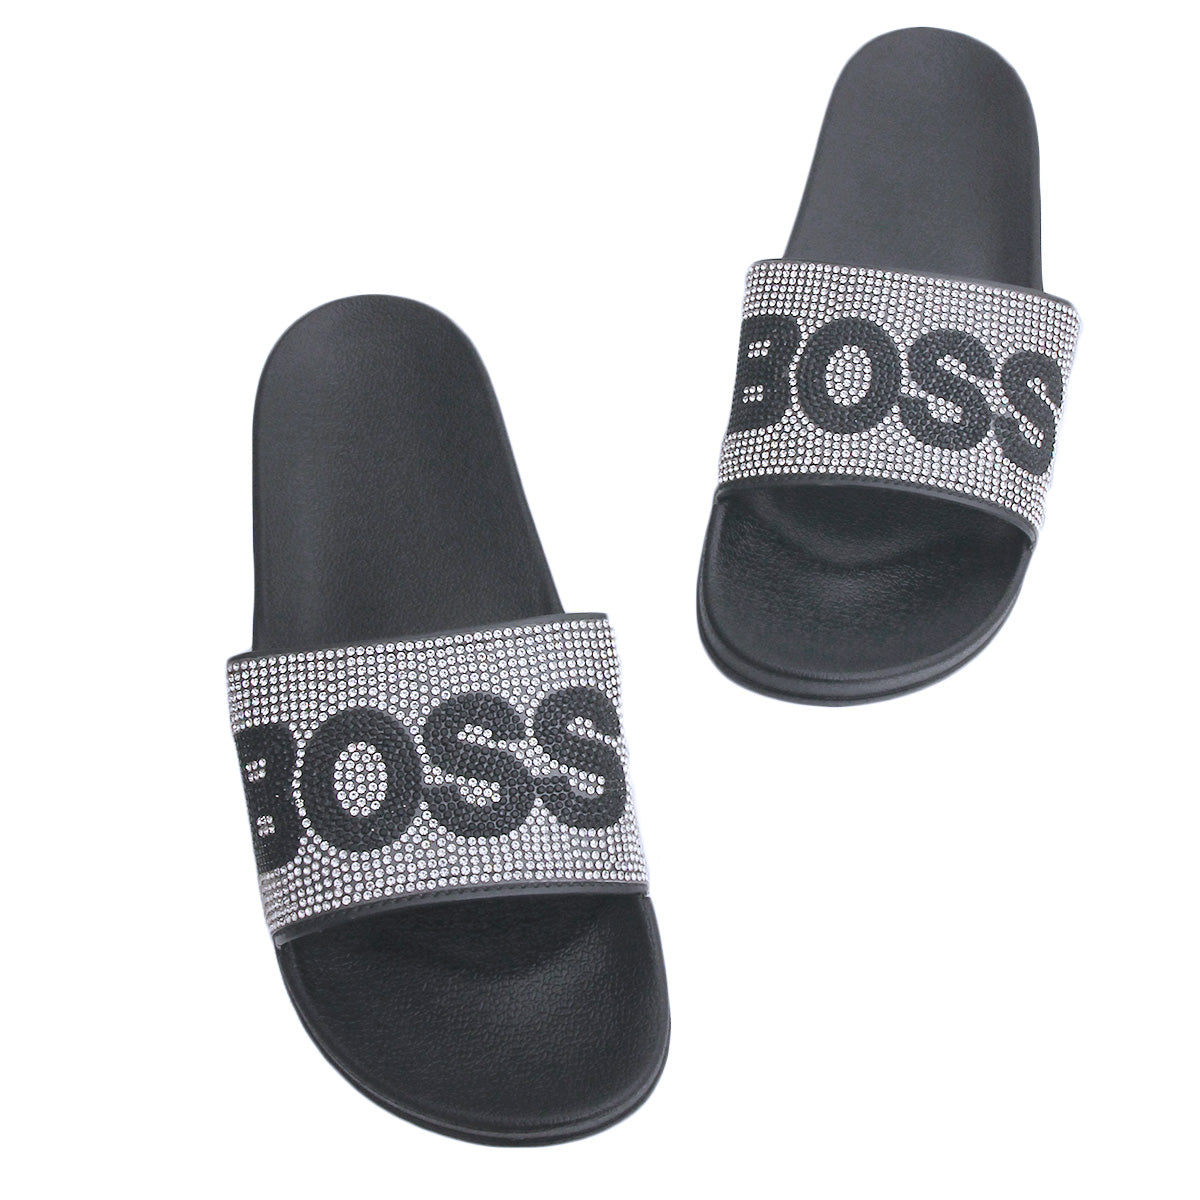 Size 9 Silver BOSS Black Slides